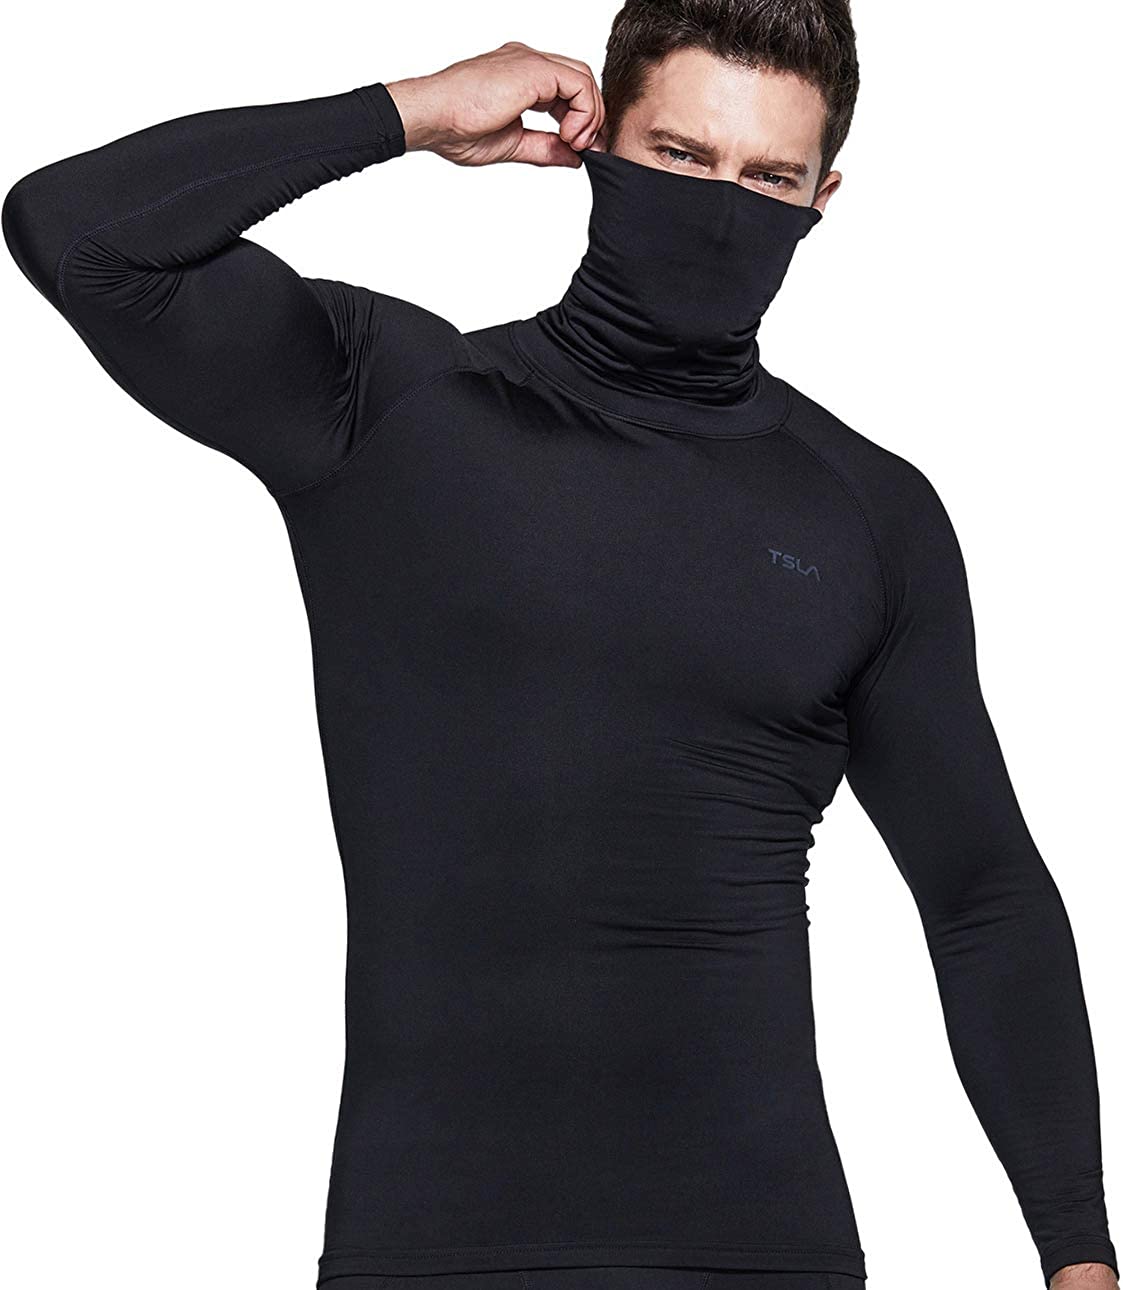 Mock/Turtleneck Winter Sports Running Base Layer Top TSLA 1 or 2 Pack Men's Thermal Long Sleeve Compression Shirts 